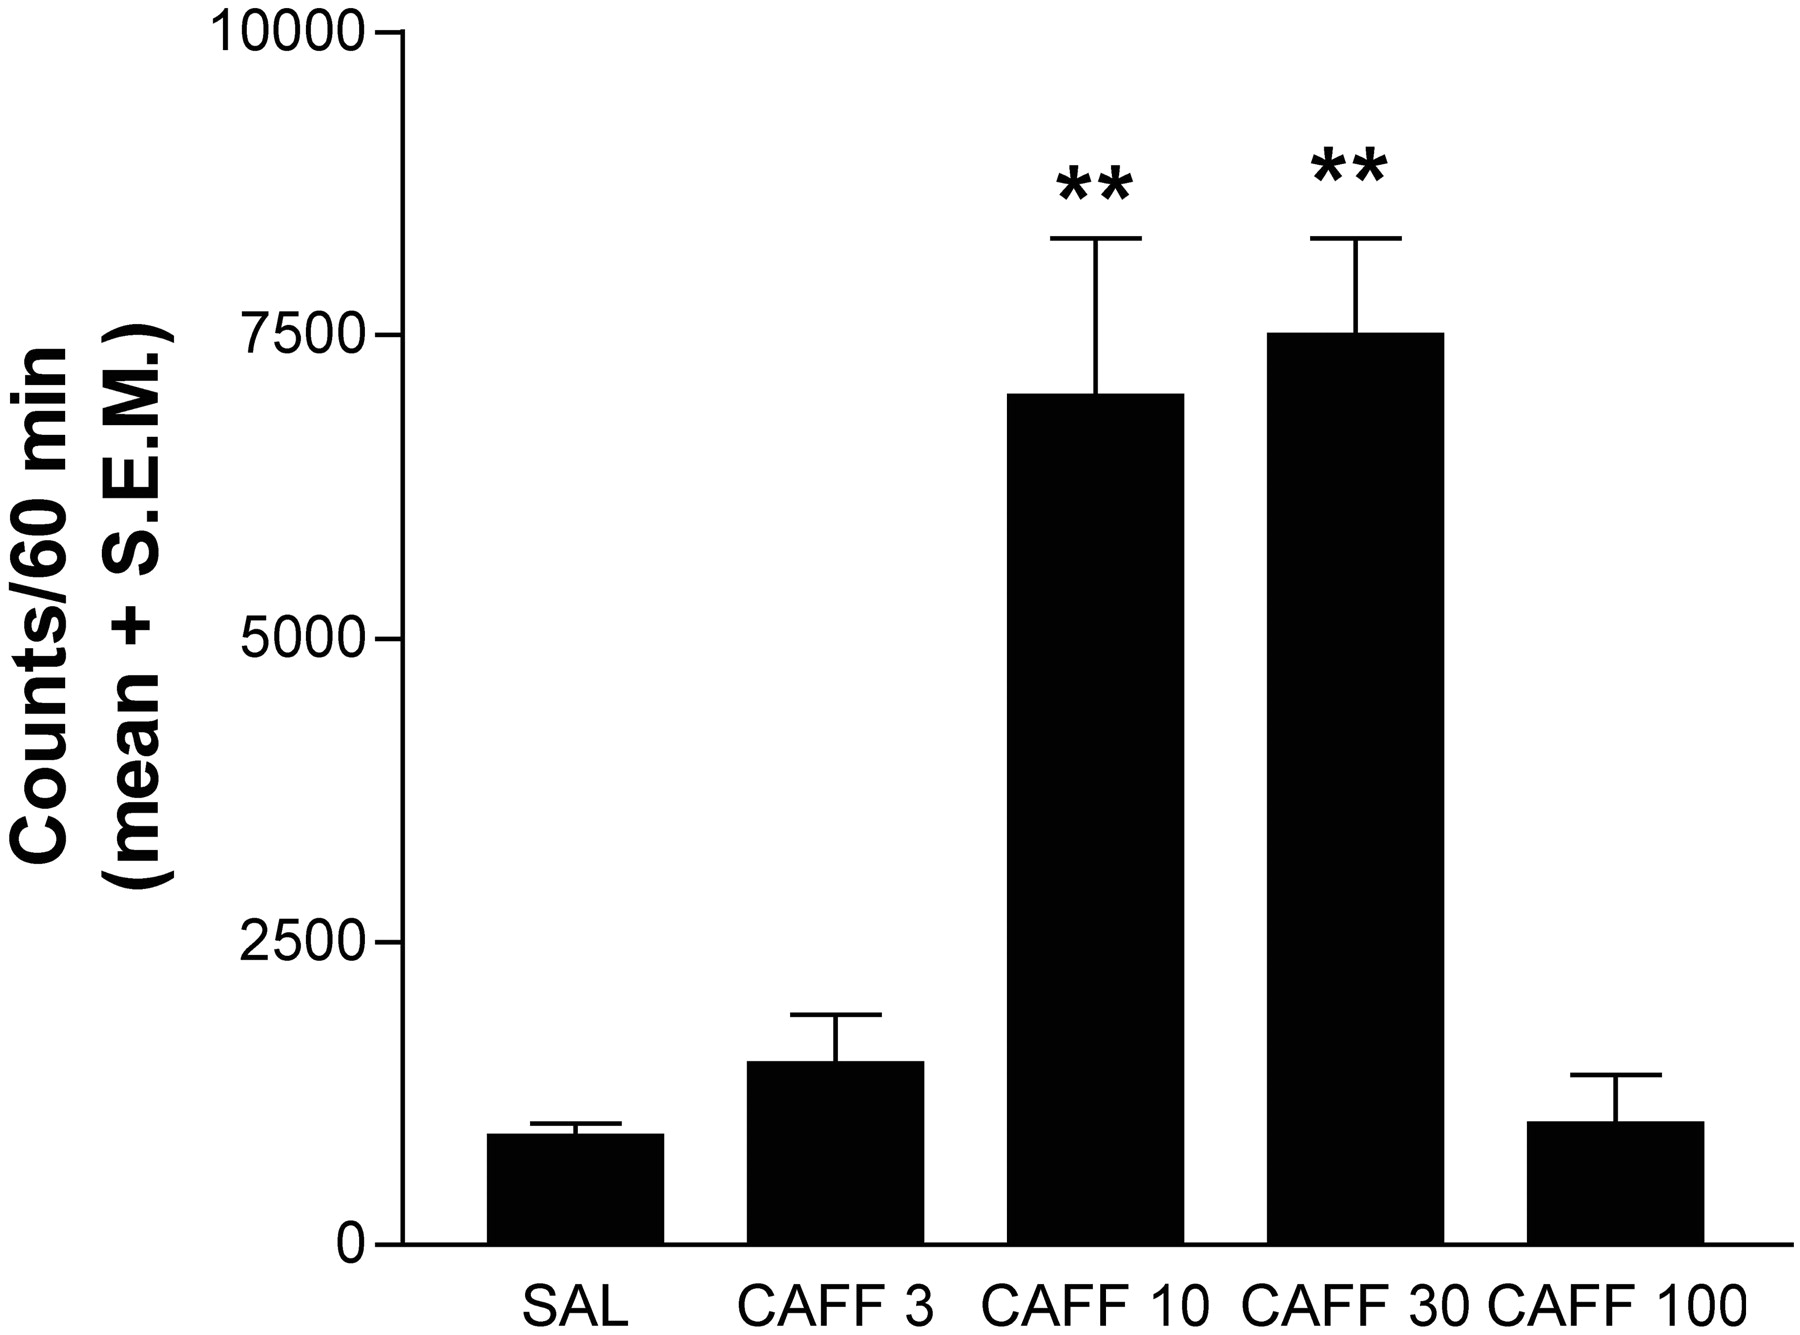 Does Caffeine Kill Dopamine Receptors?